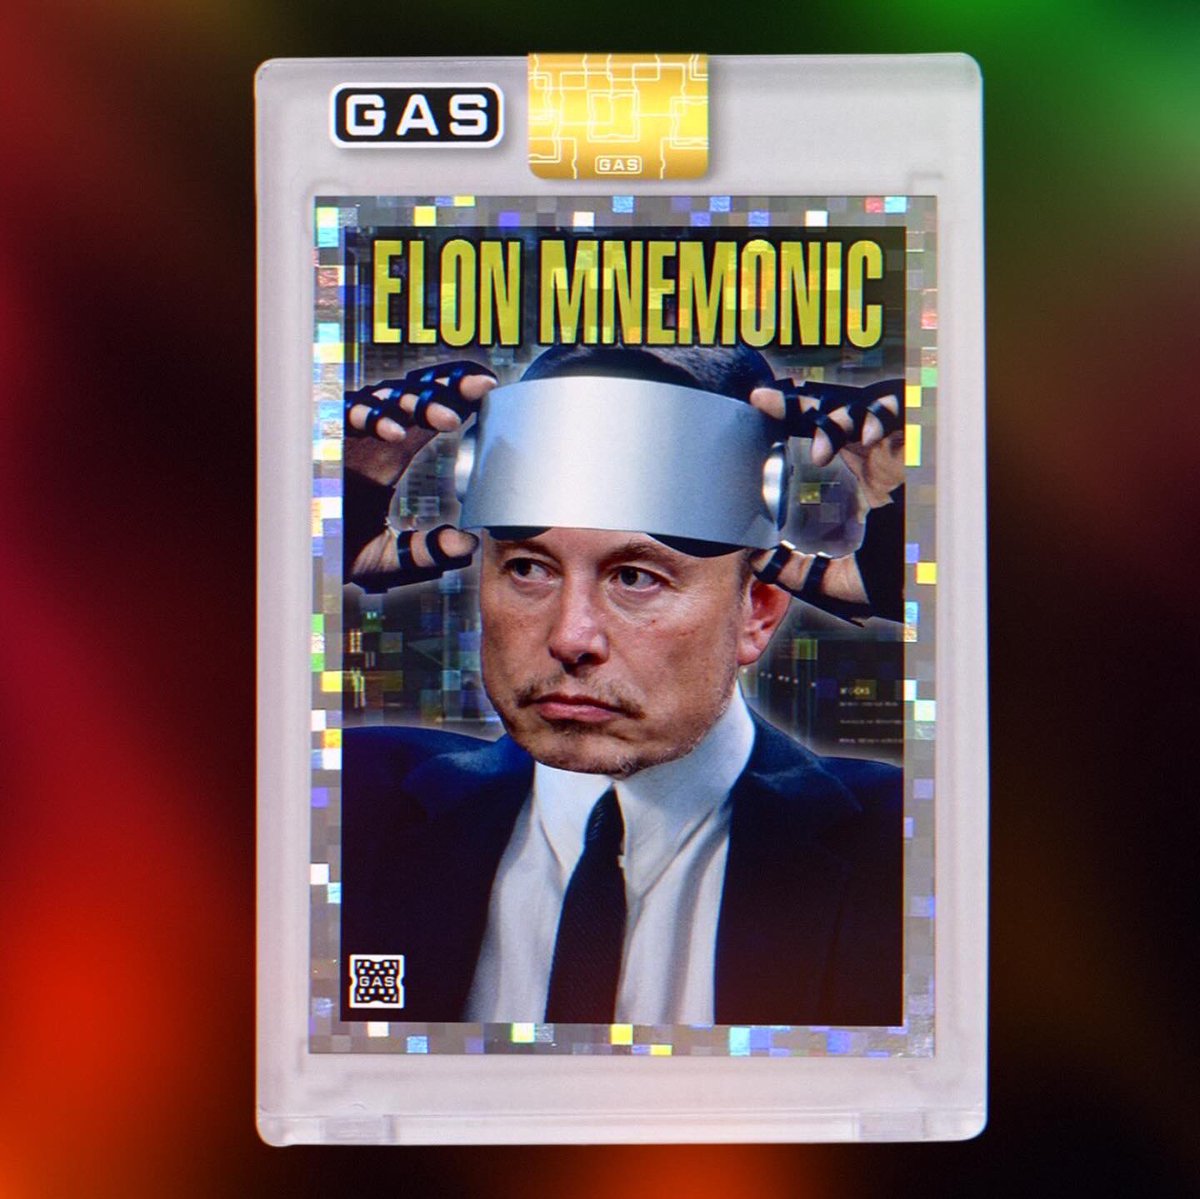 Shock Drop! Limited Edition GAS Elon Mnemonic Pixel Foil Prism Cards Available for Preorder on GASTradingCards.com & @NTWRKLIVE Ltd to 100 Sequentially Numbered Pixel Foil Prism Trading Cards! #elonmusk #neuralink #johnnymnemonic #tradingcards #gastradingcards #shockdrop